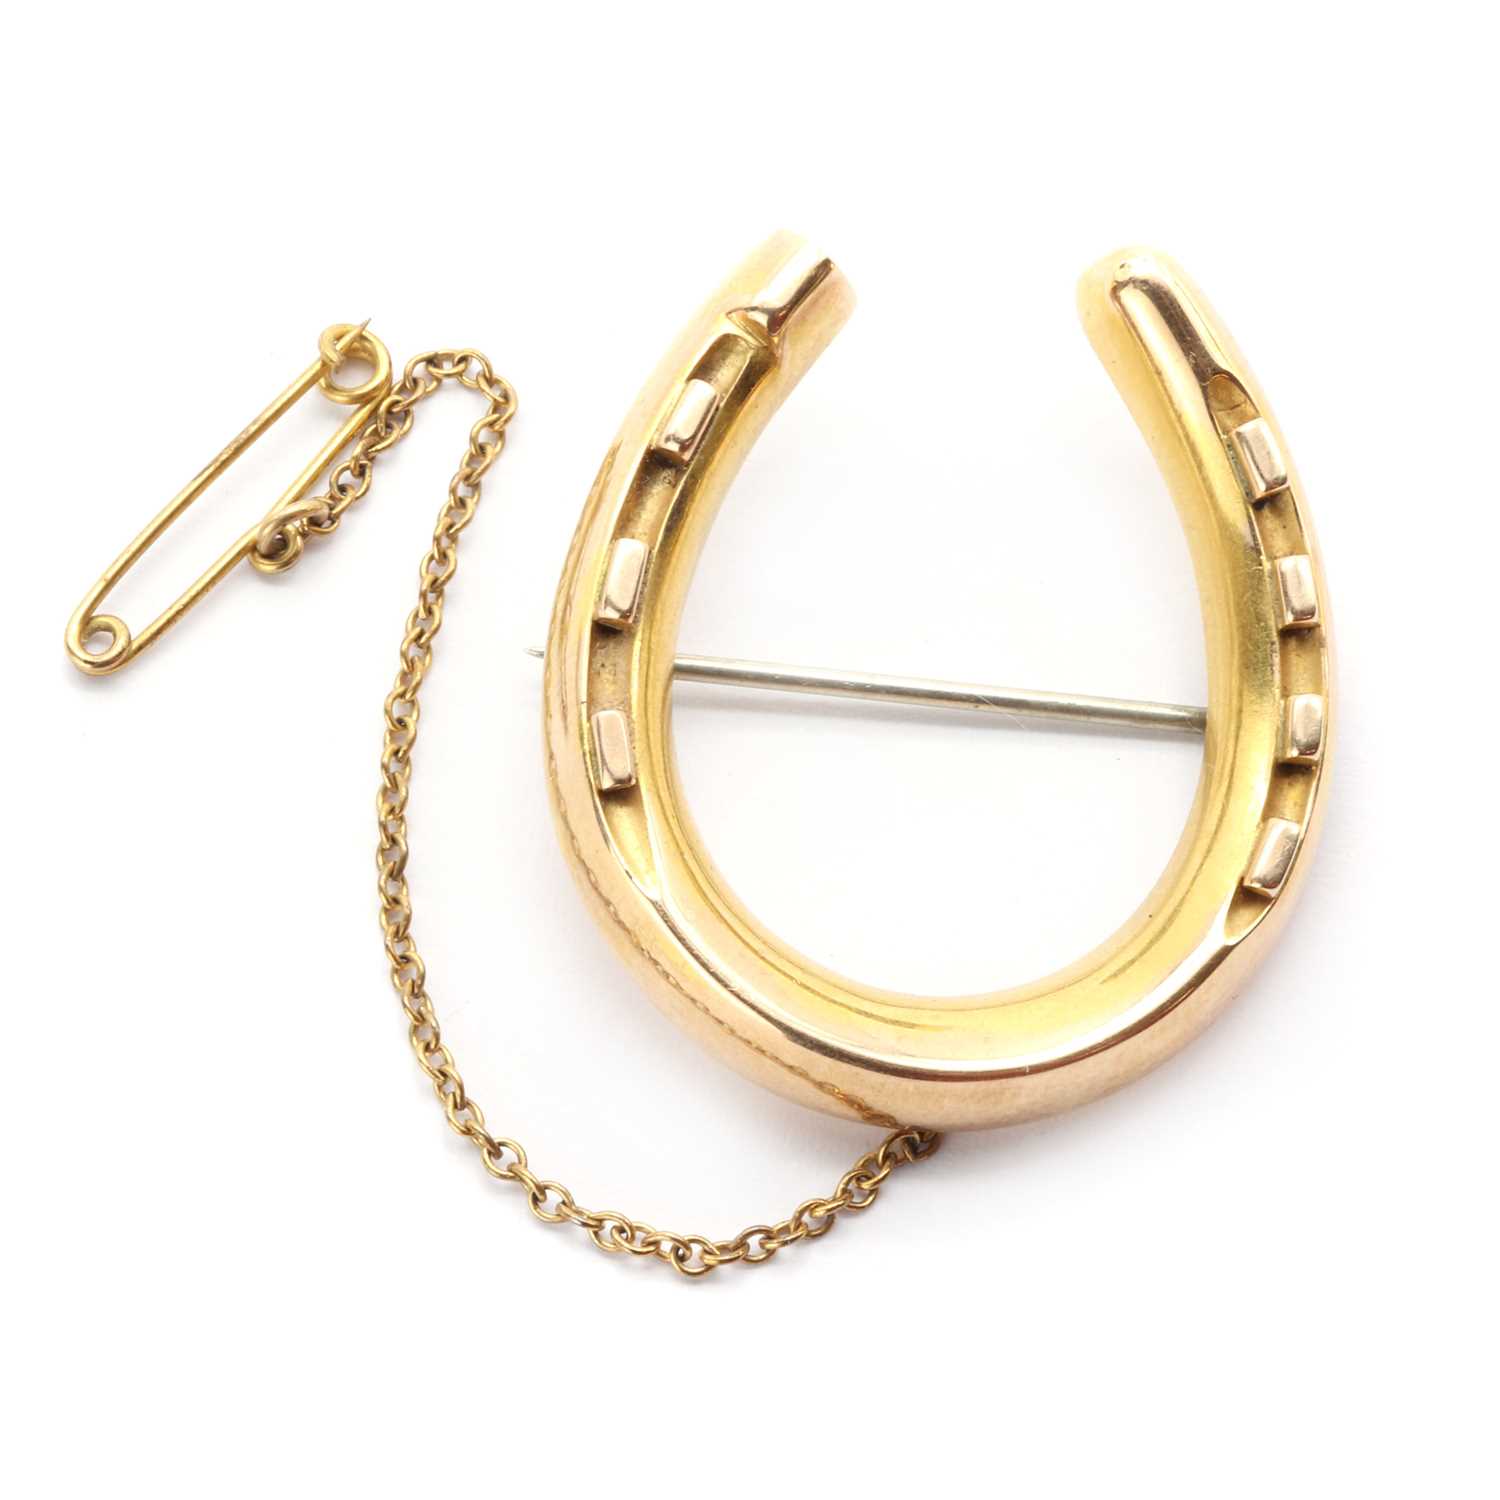 A Victorian gold hollow horseshoe brooch,